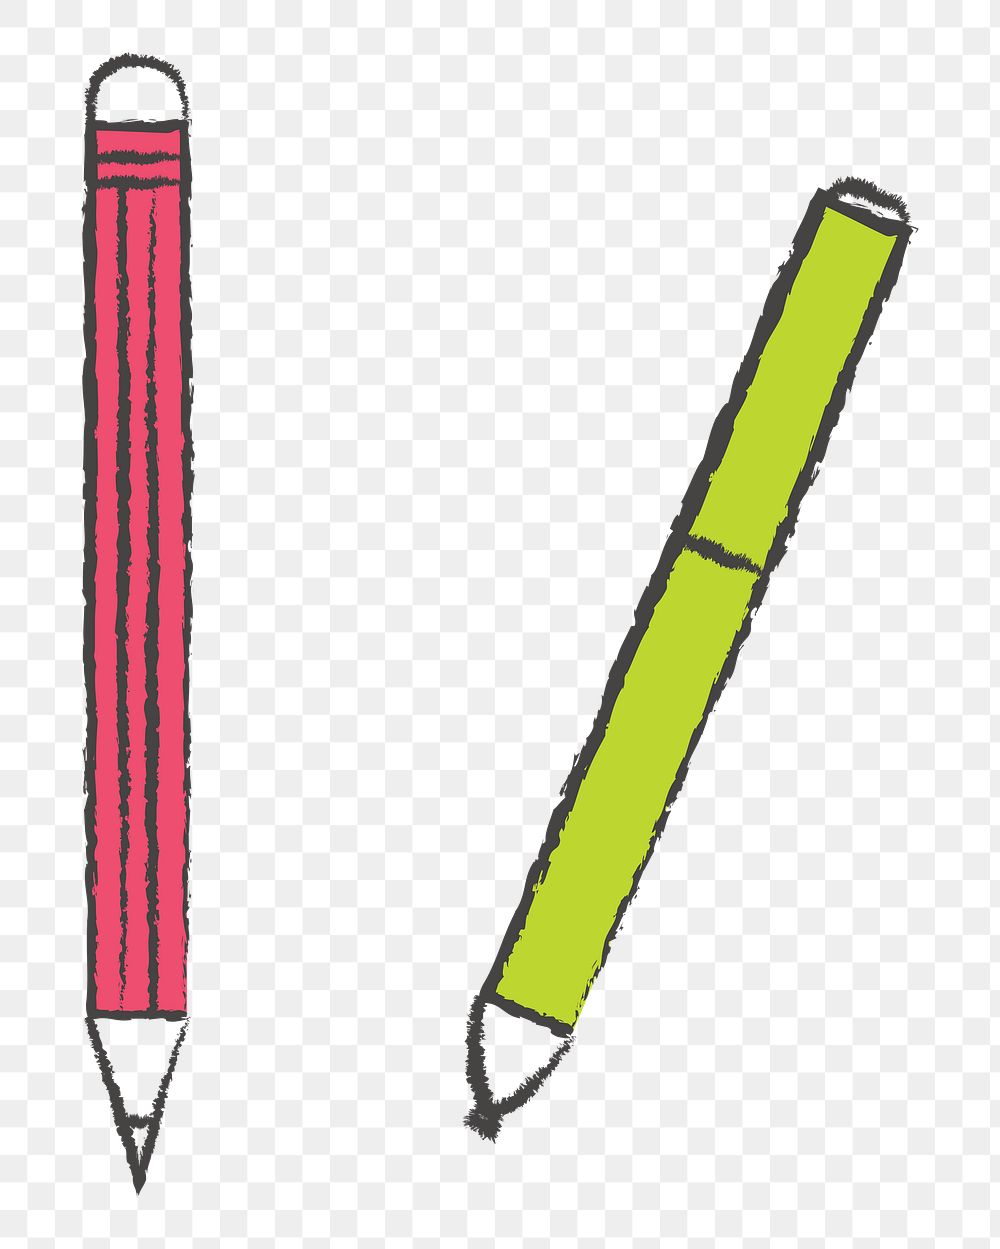 Png pen and pencil design element, transparent background